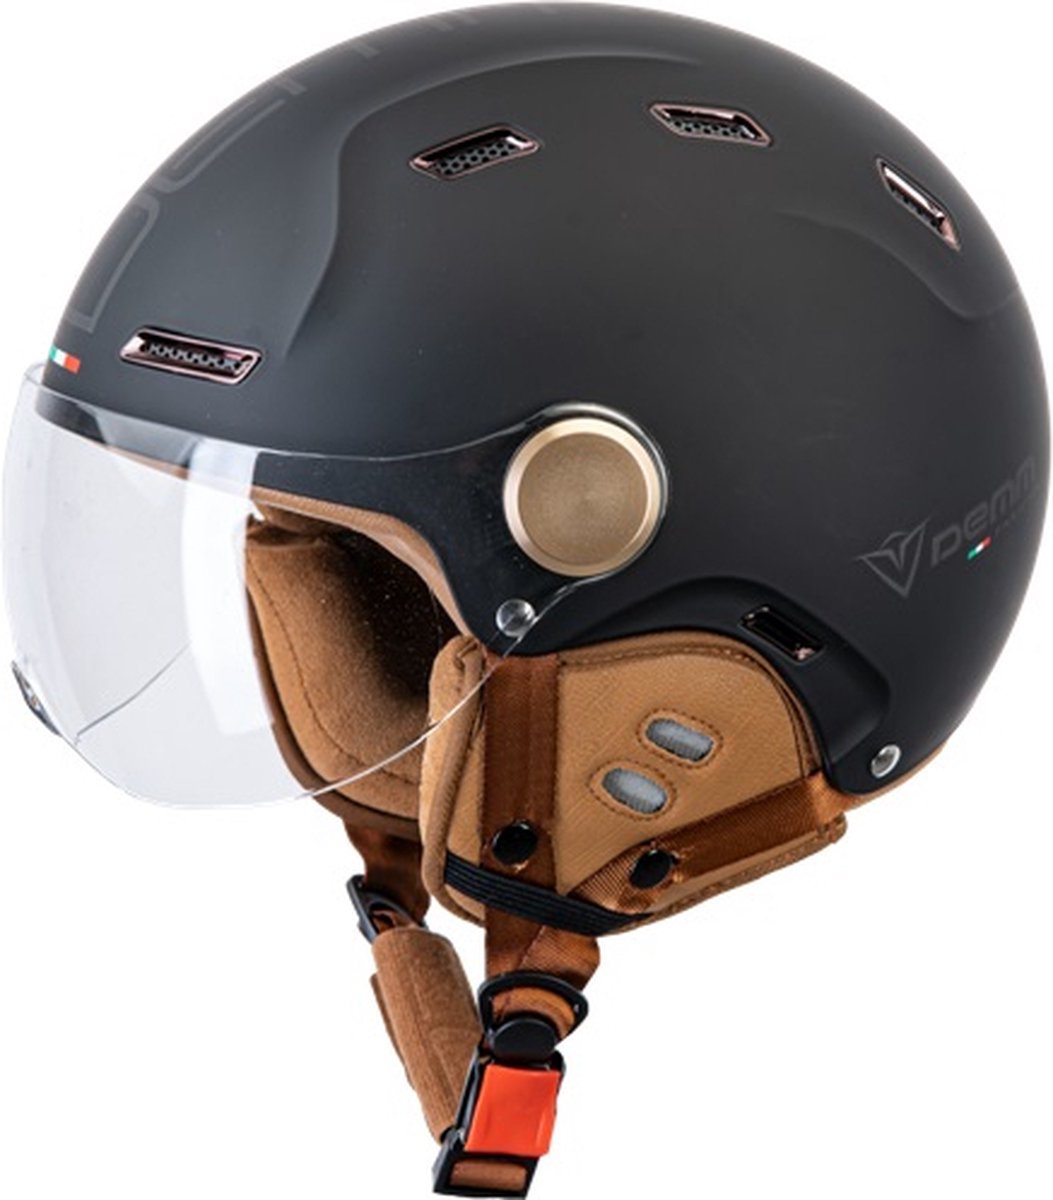 DEMM Speed Pedelec E-bike / snorfiets helm - mat zwart - S / 55-56 cm